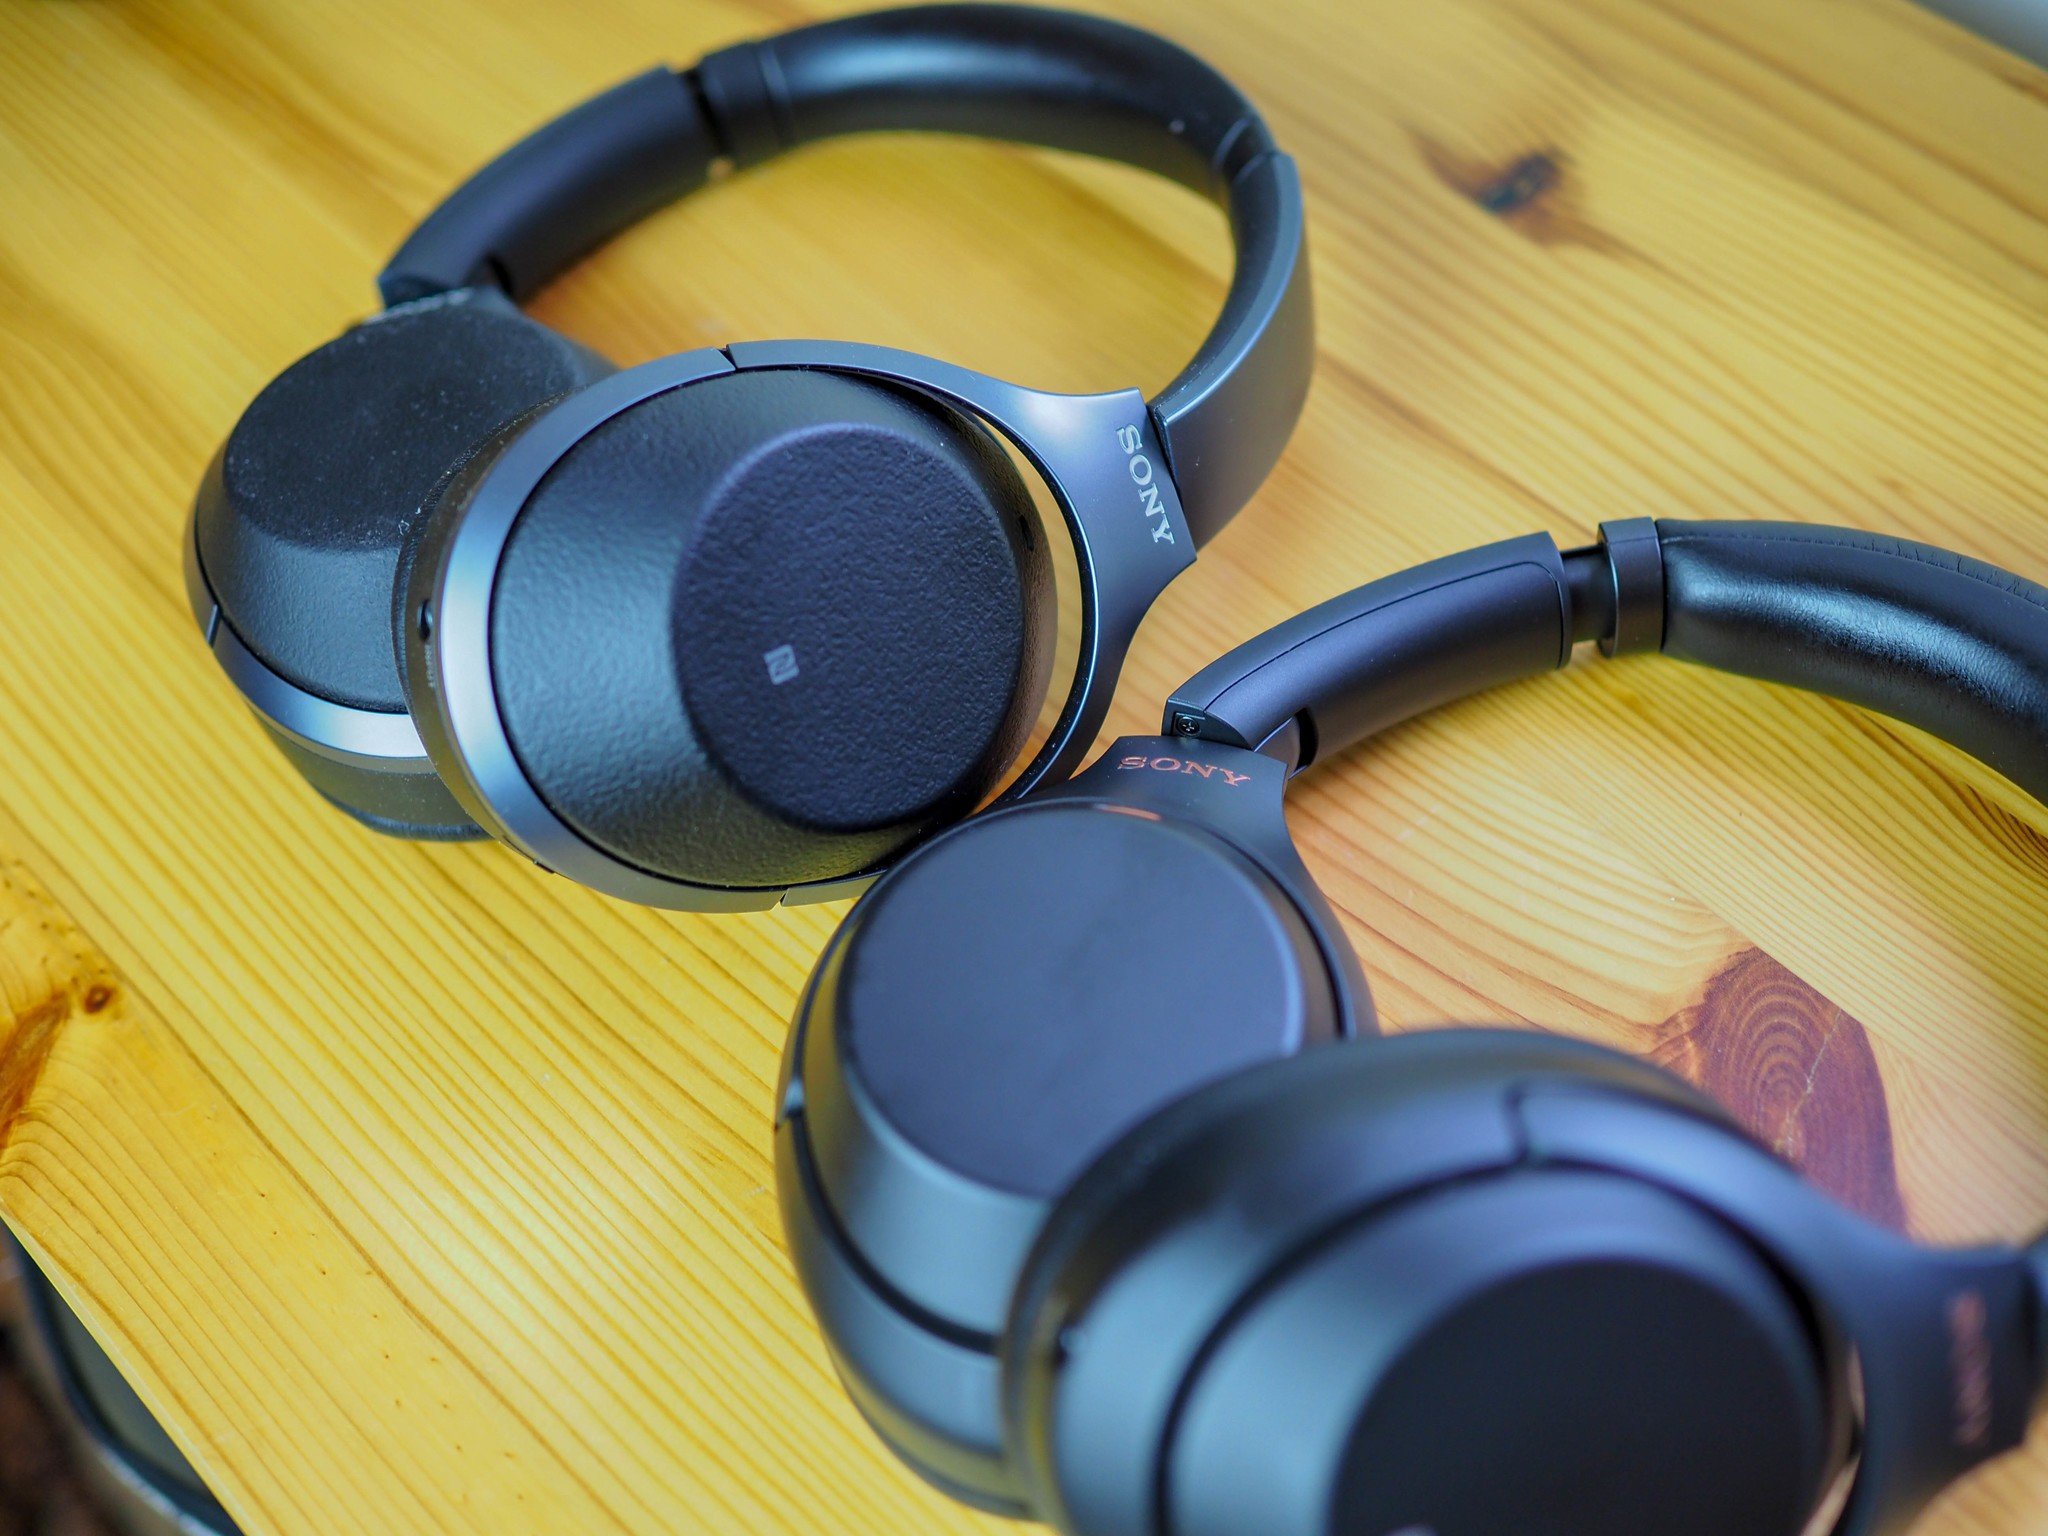 Best headphones with Amazon Alexa support 2021